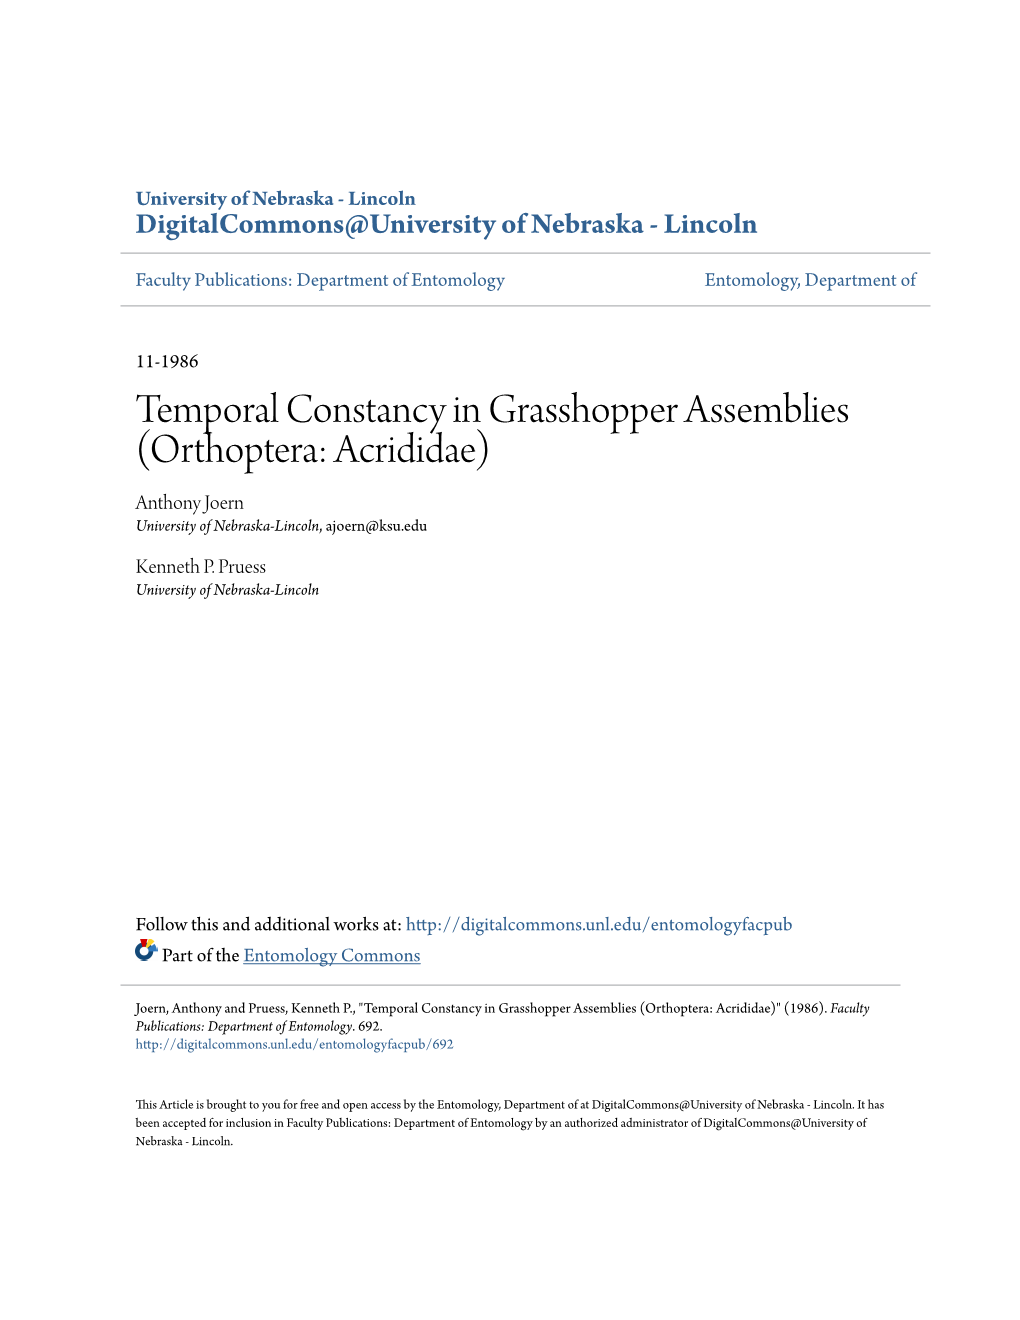 Temporal Constancy in Grasshopper Assemblies (Orthoptera: Acrididae) Anthony Joern University of Nebraska-Lincoln, Ajoern@Ksu.Edu